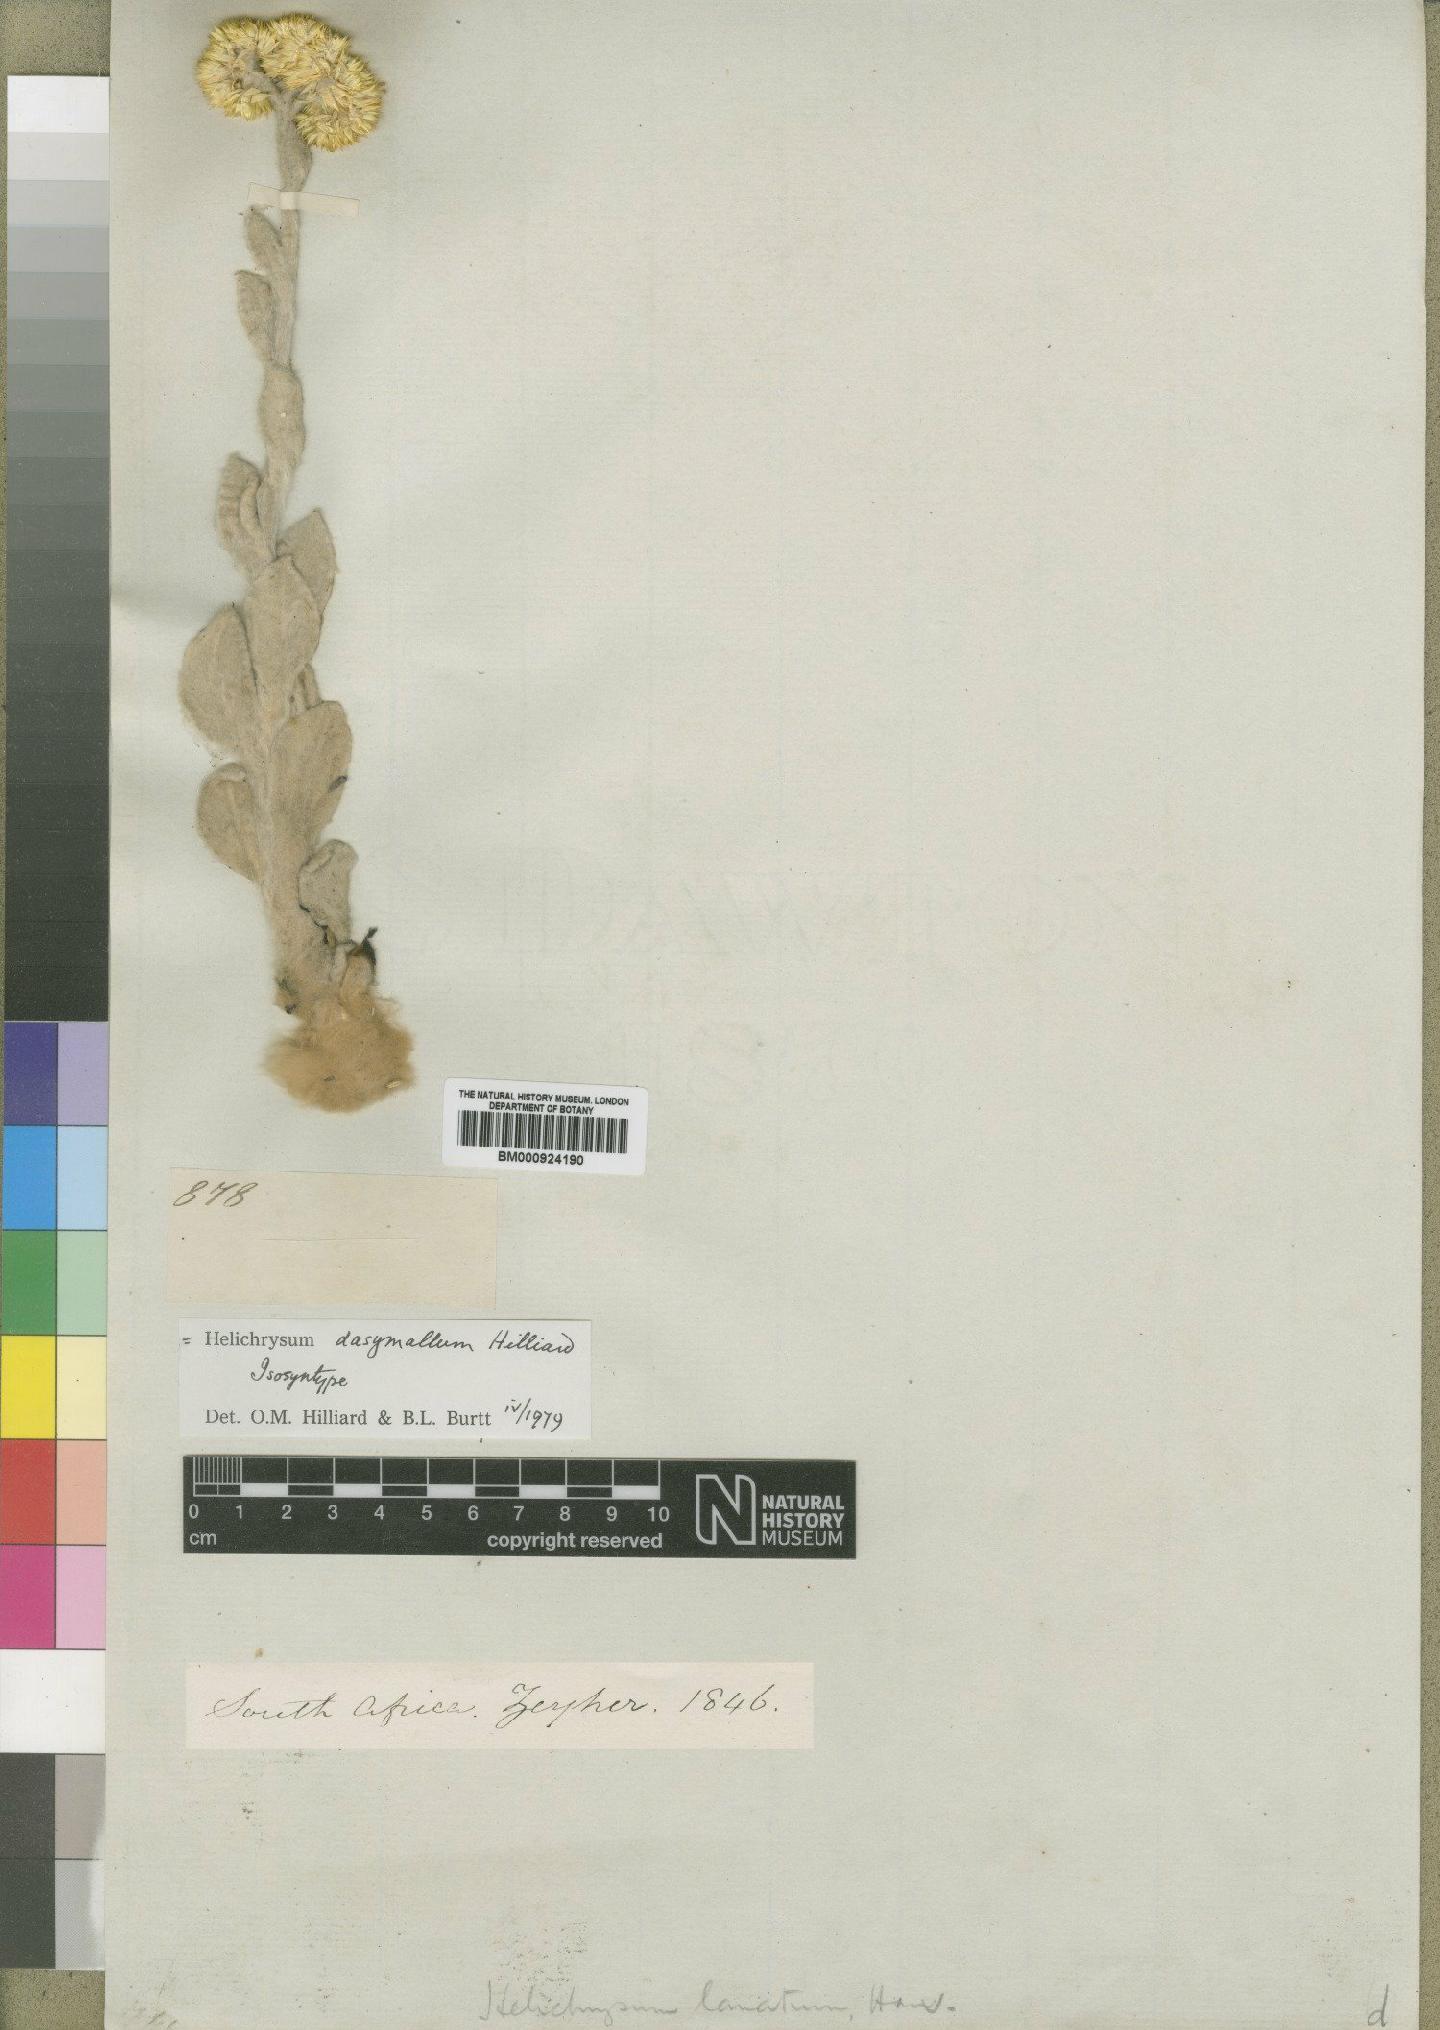 To NHMUK collection (Helichrysum dasymallum Hilliard; Isosyntype; NHMUK:ecatalogue:4529218)